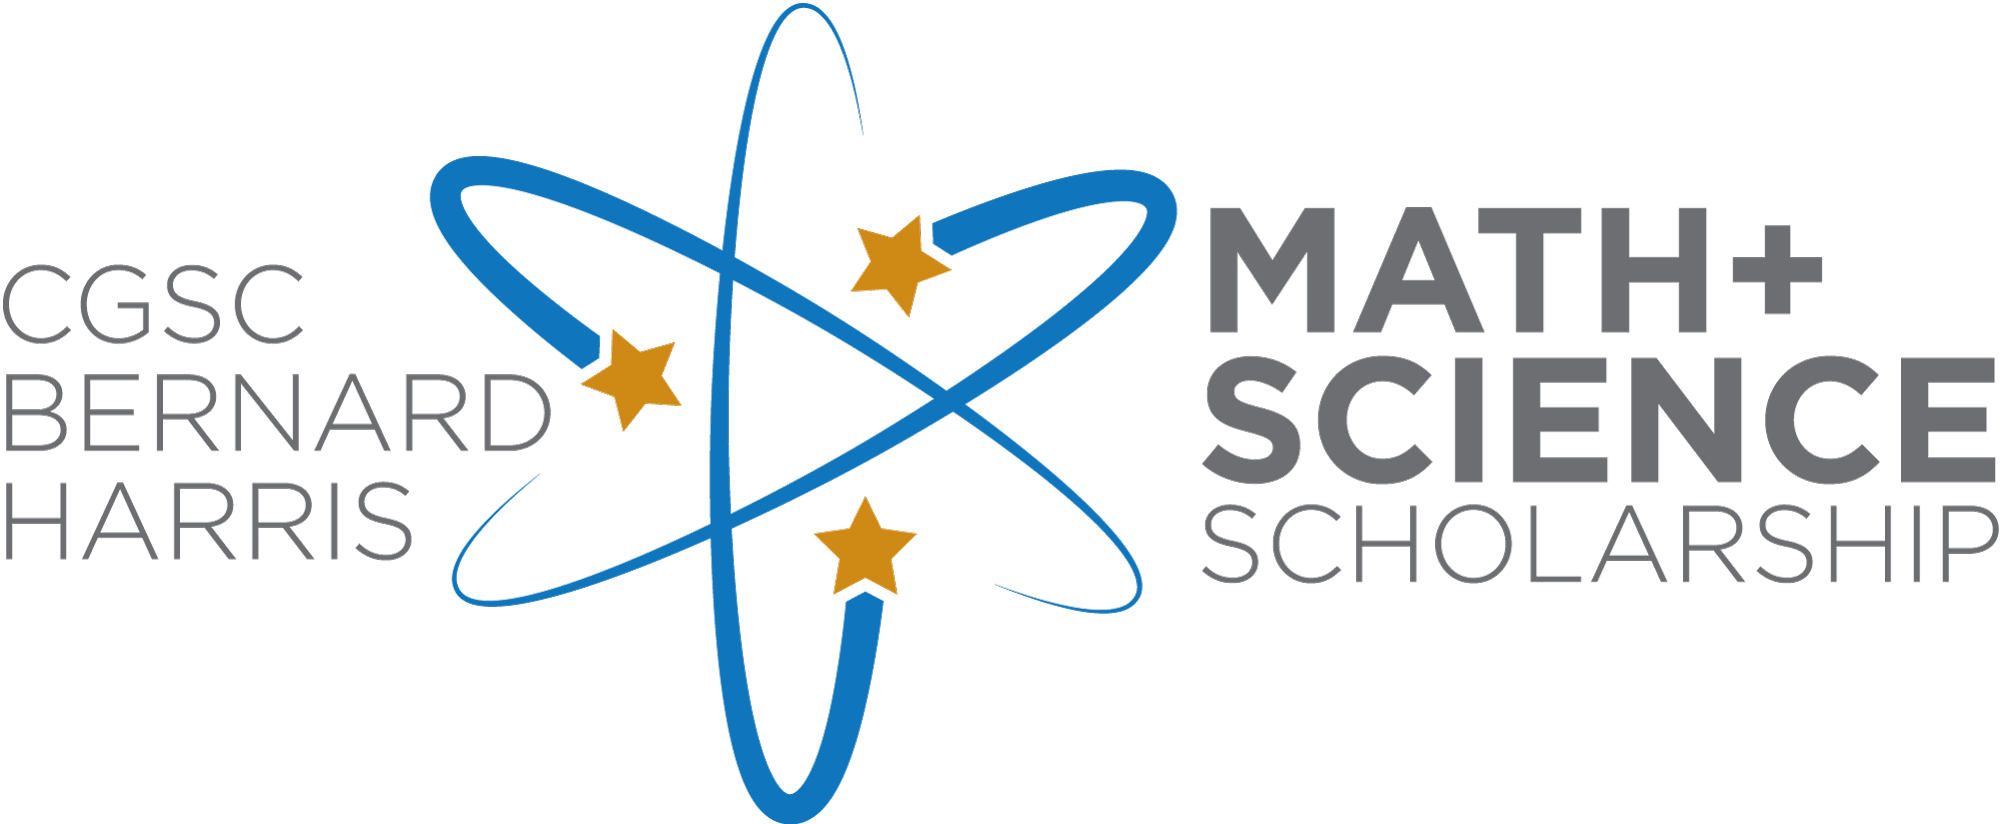 CGSC Bernard Harris Math + Science Scholarship logo